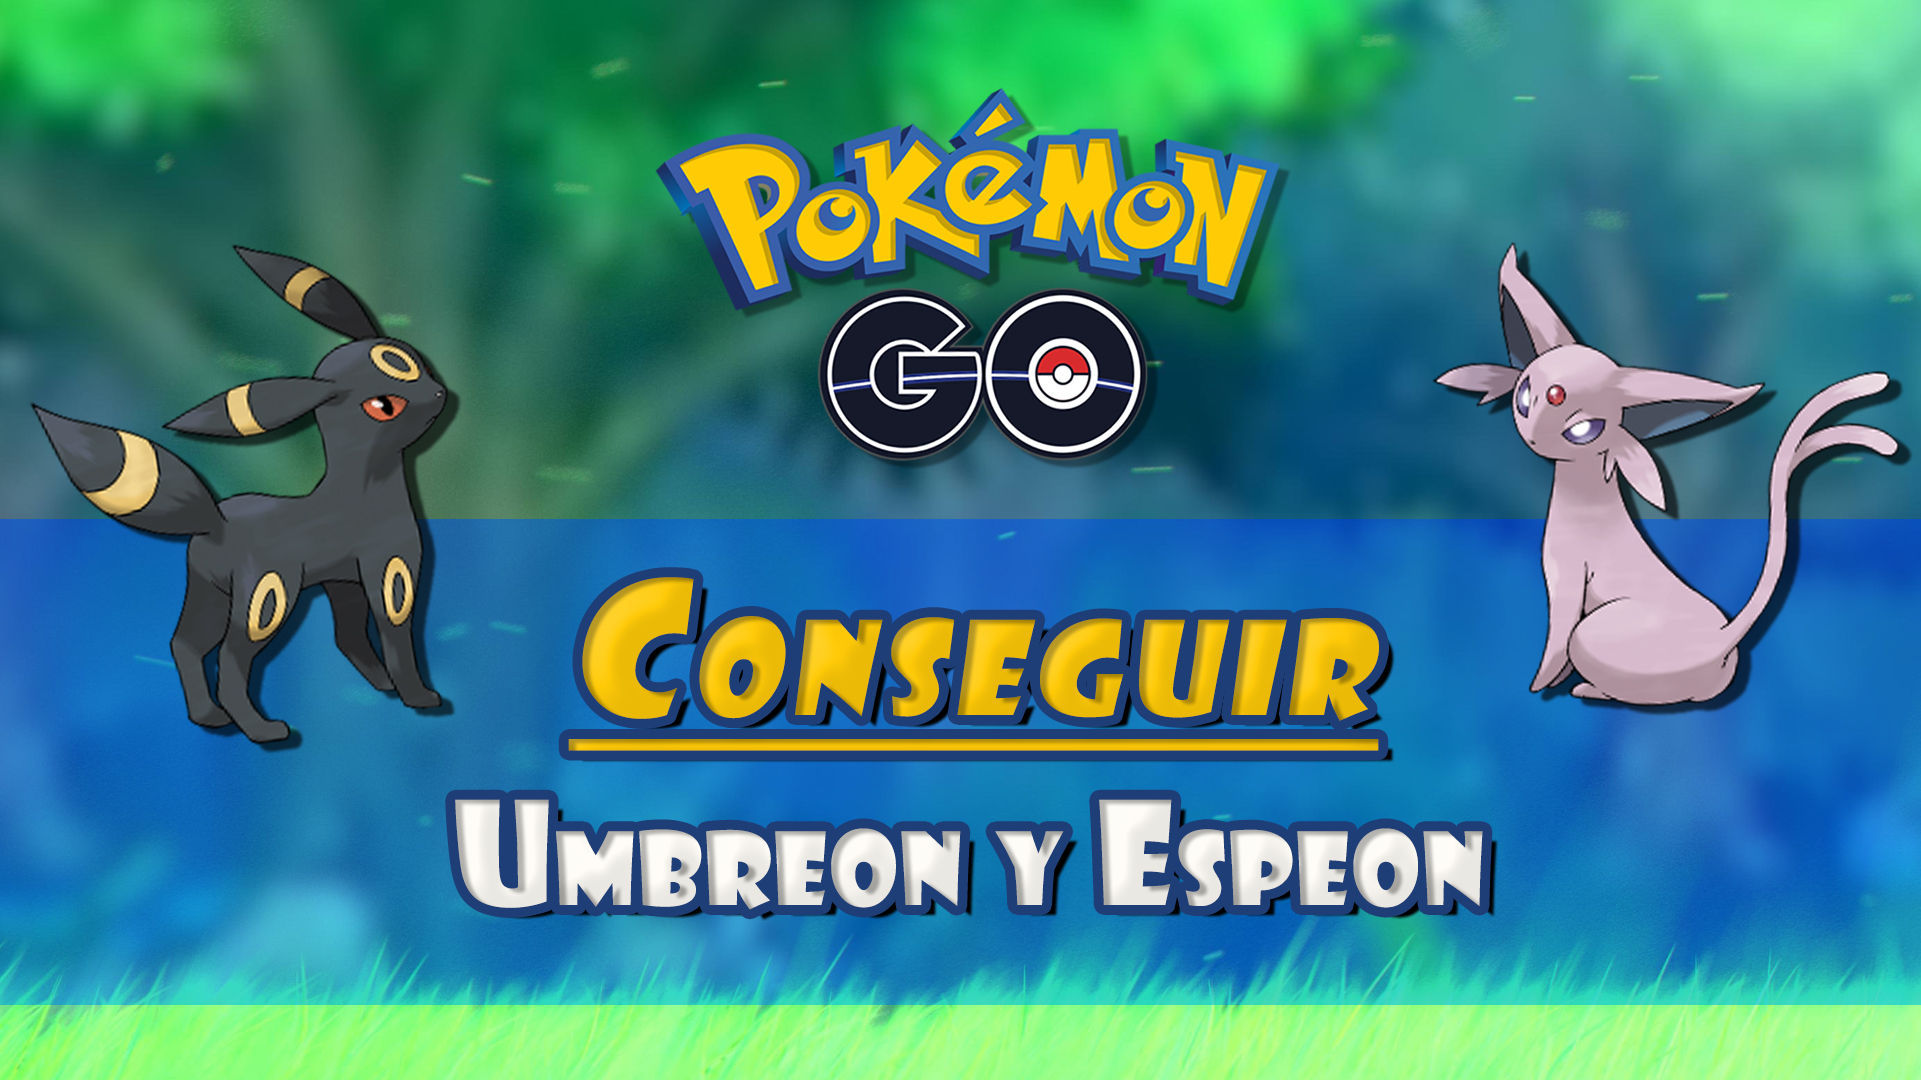 How to get Umbreon in Pokemon GO